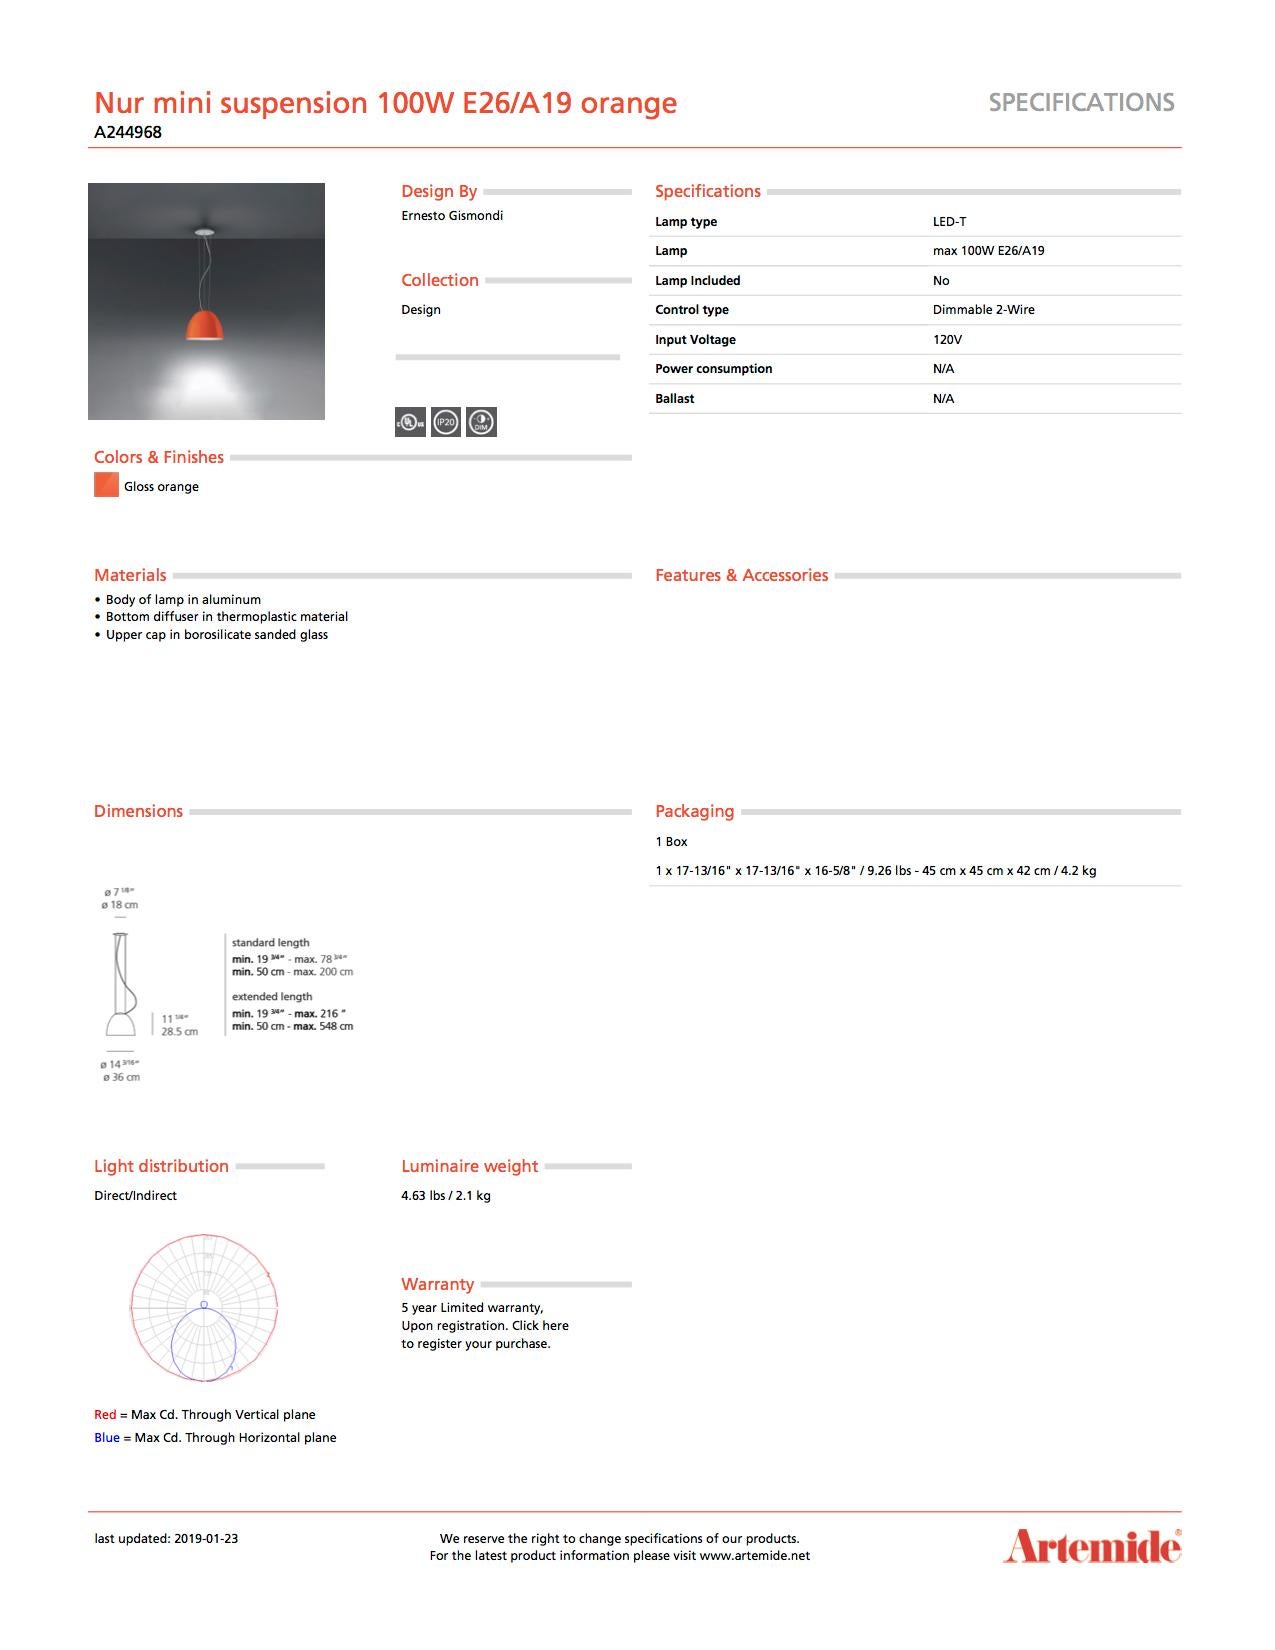 Italian Artemide Nur Mini Suspension Light 100W E26/A19 in Orange For Sale